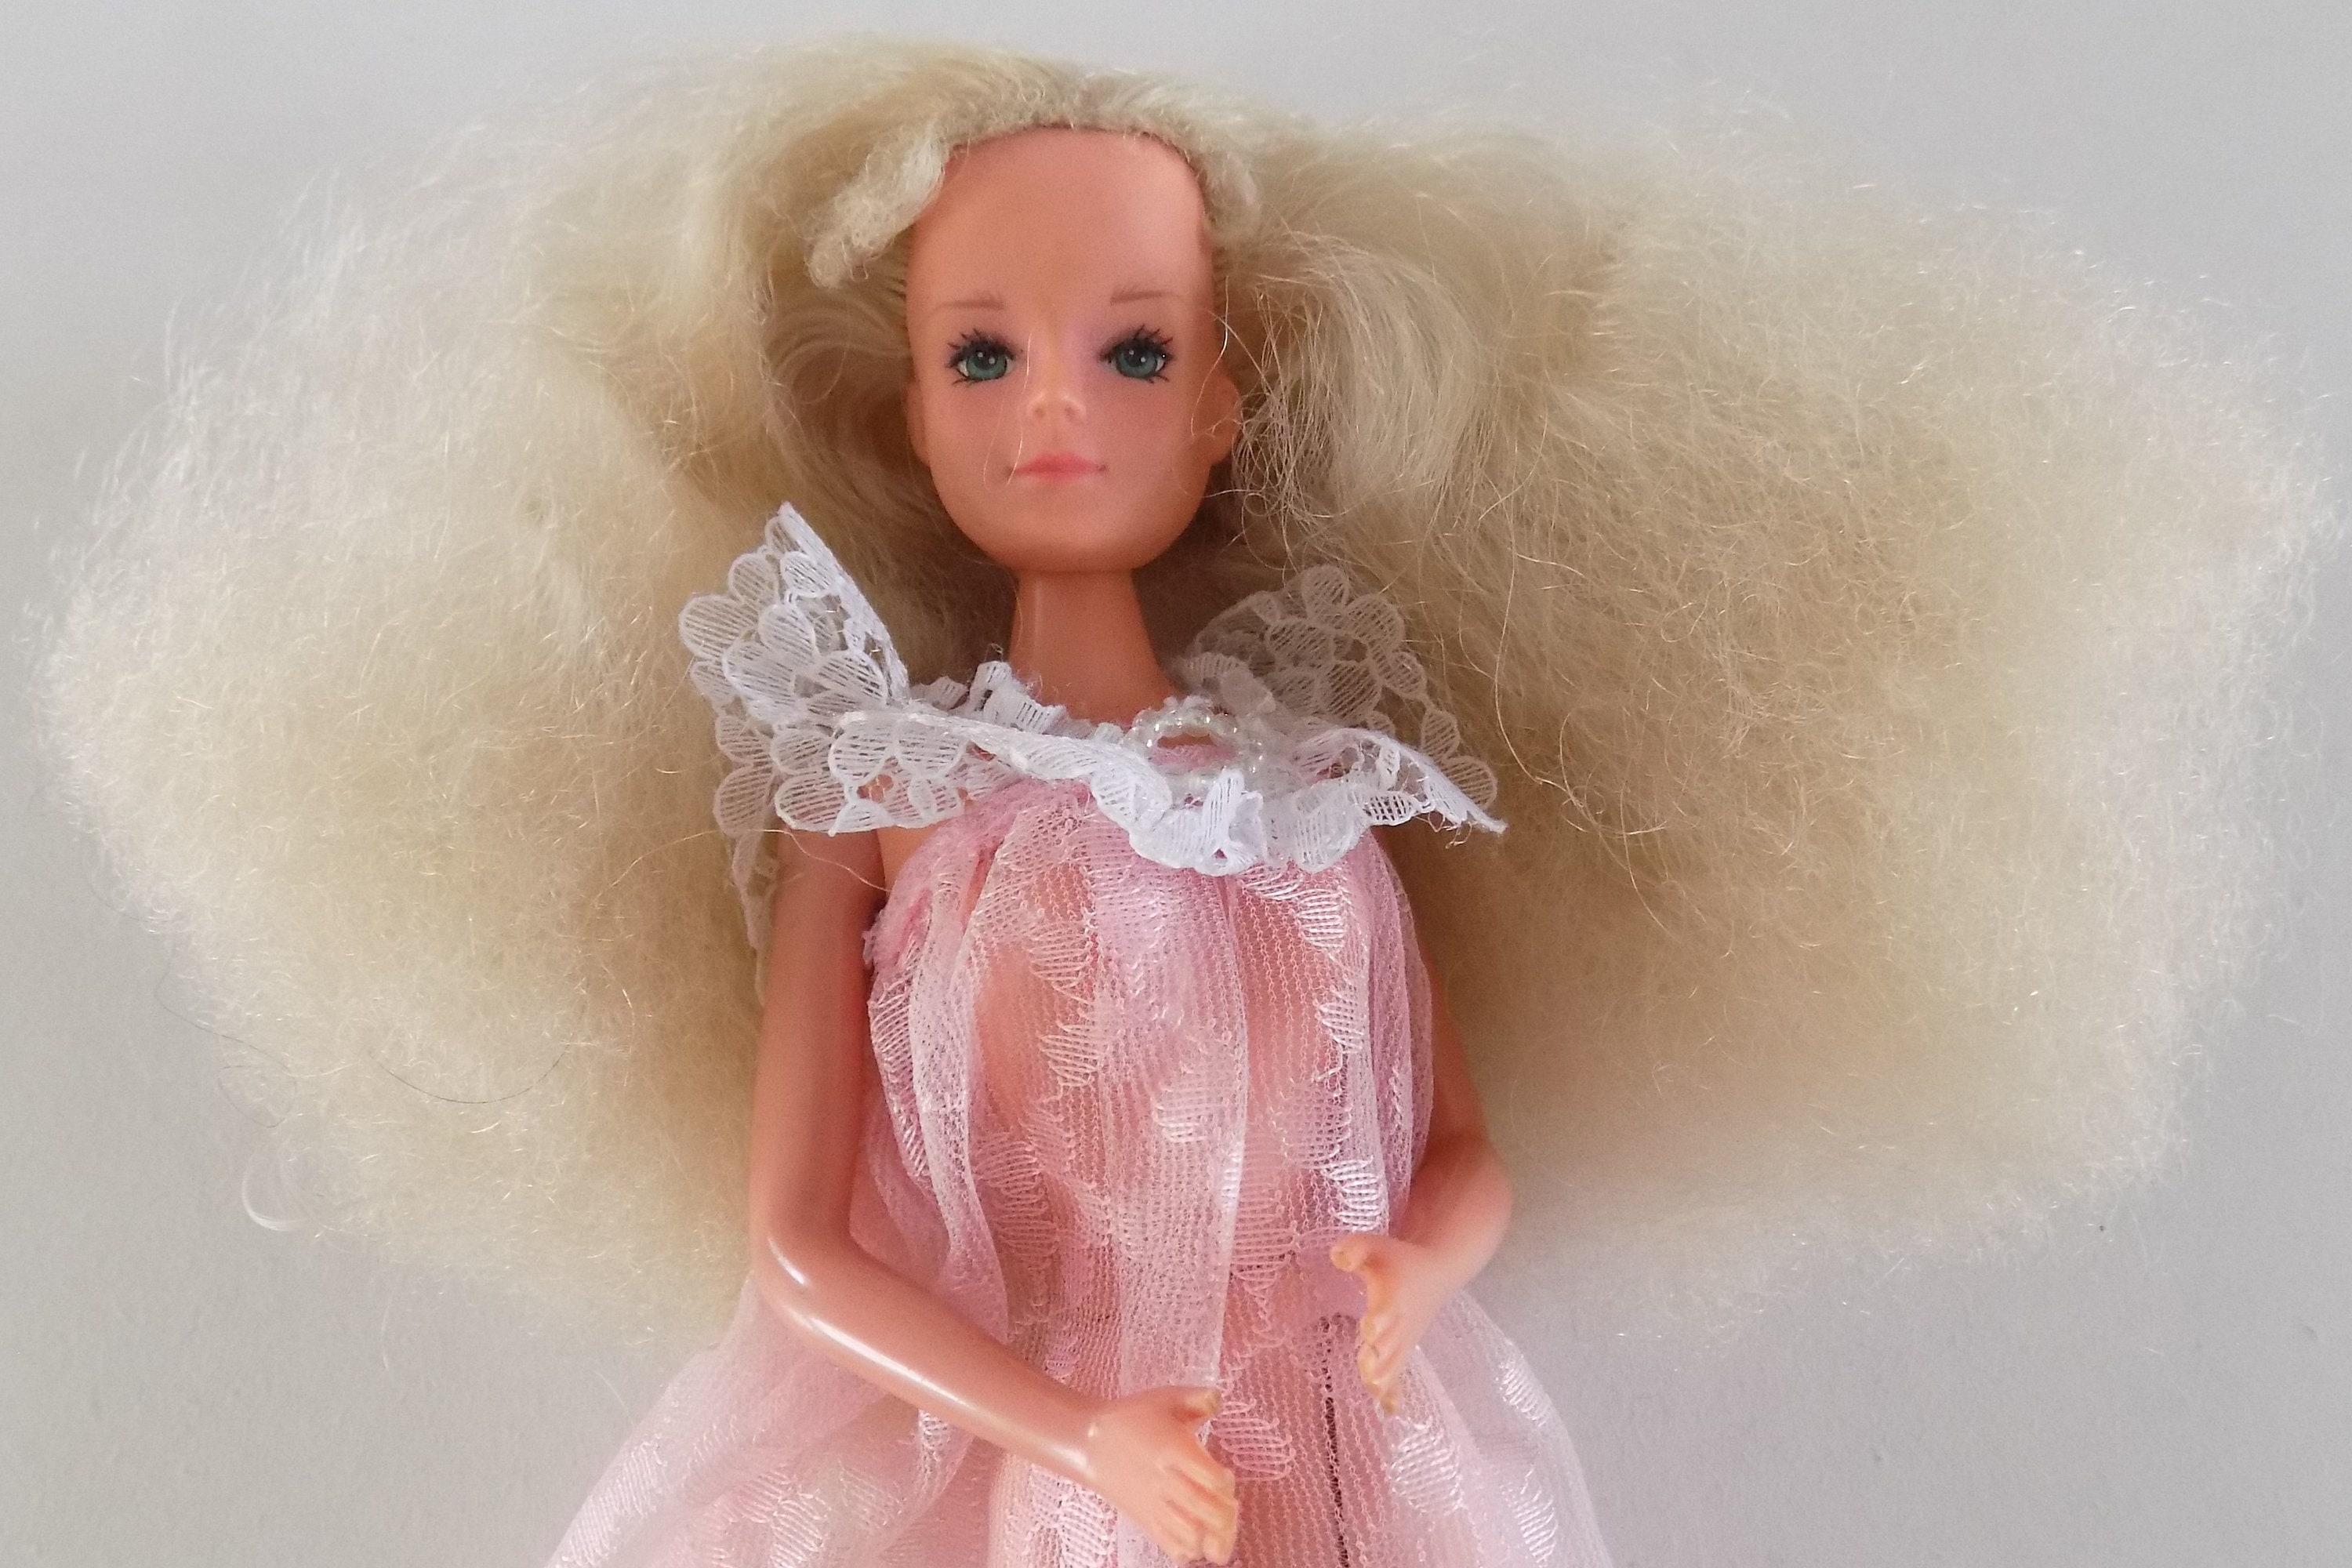 Barbie Brune Articulée Avec Robe Arc-en-ciel Extra Multicolore